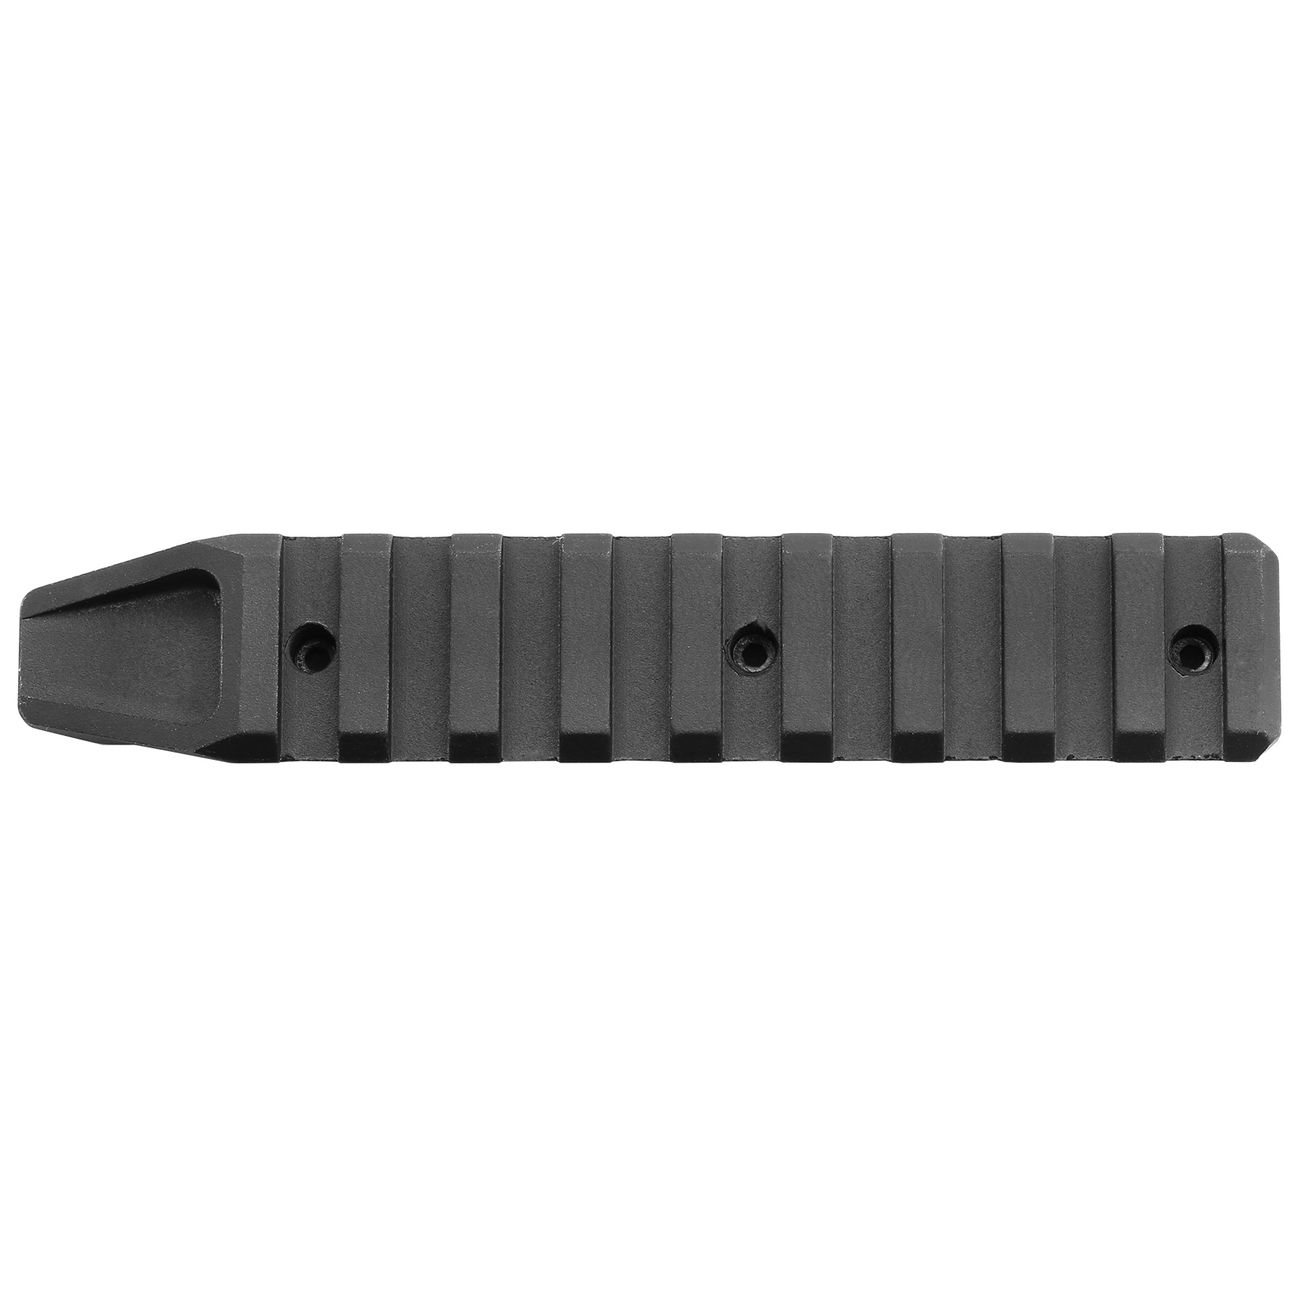 GK Tactical KeyMod 21mm Aluminium Schiene 115mm / 9 Slots schwarz Bild 3